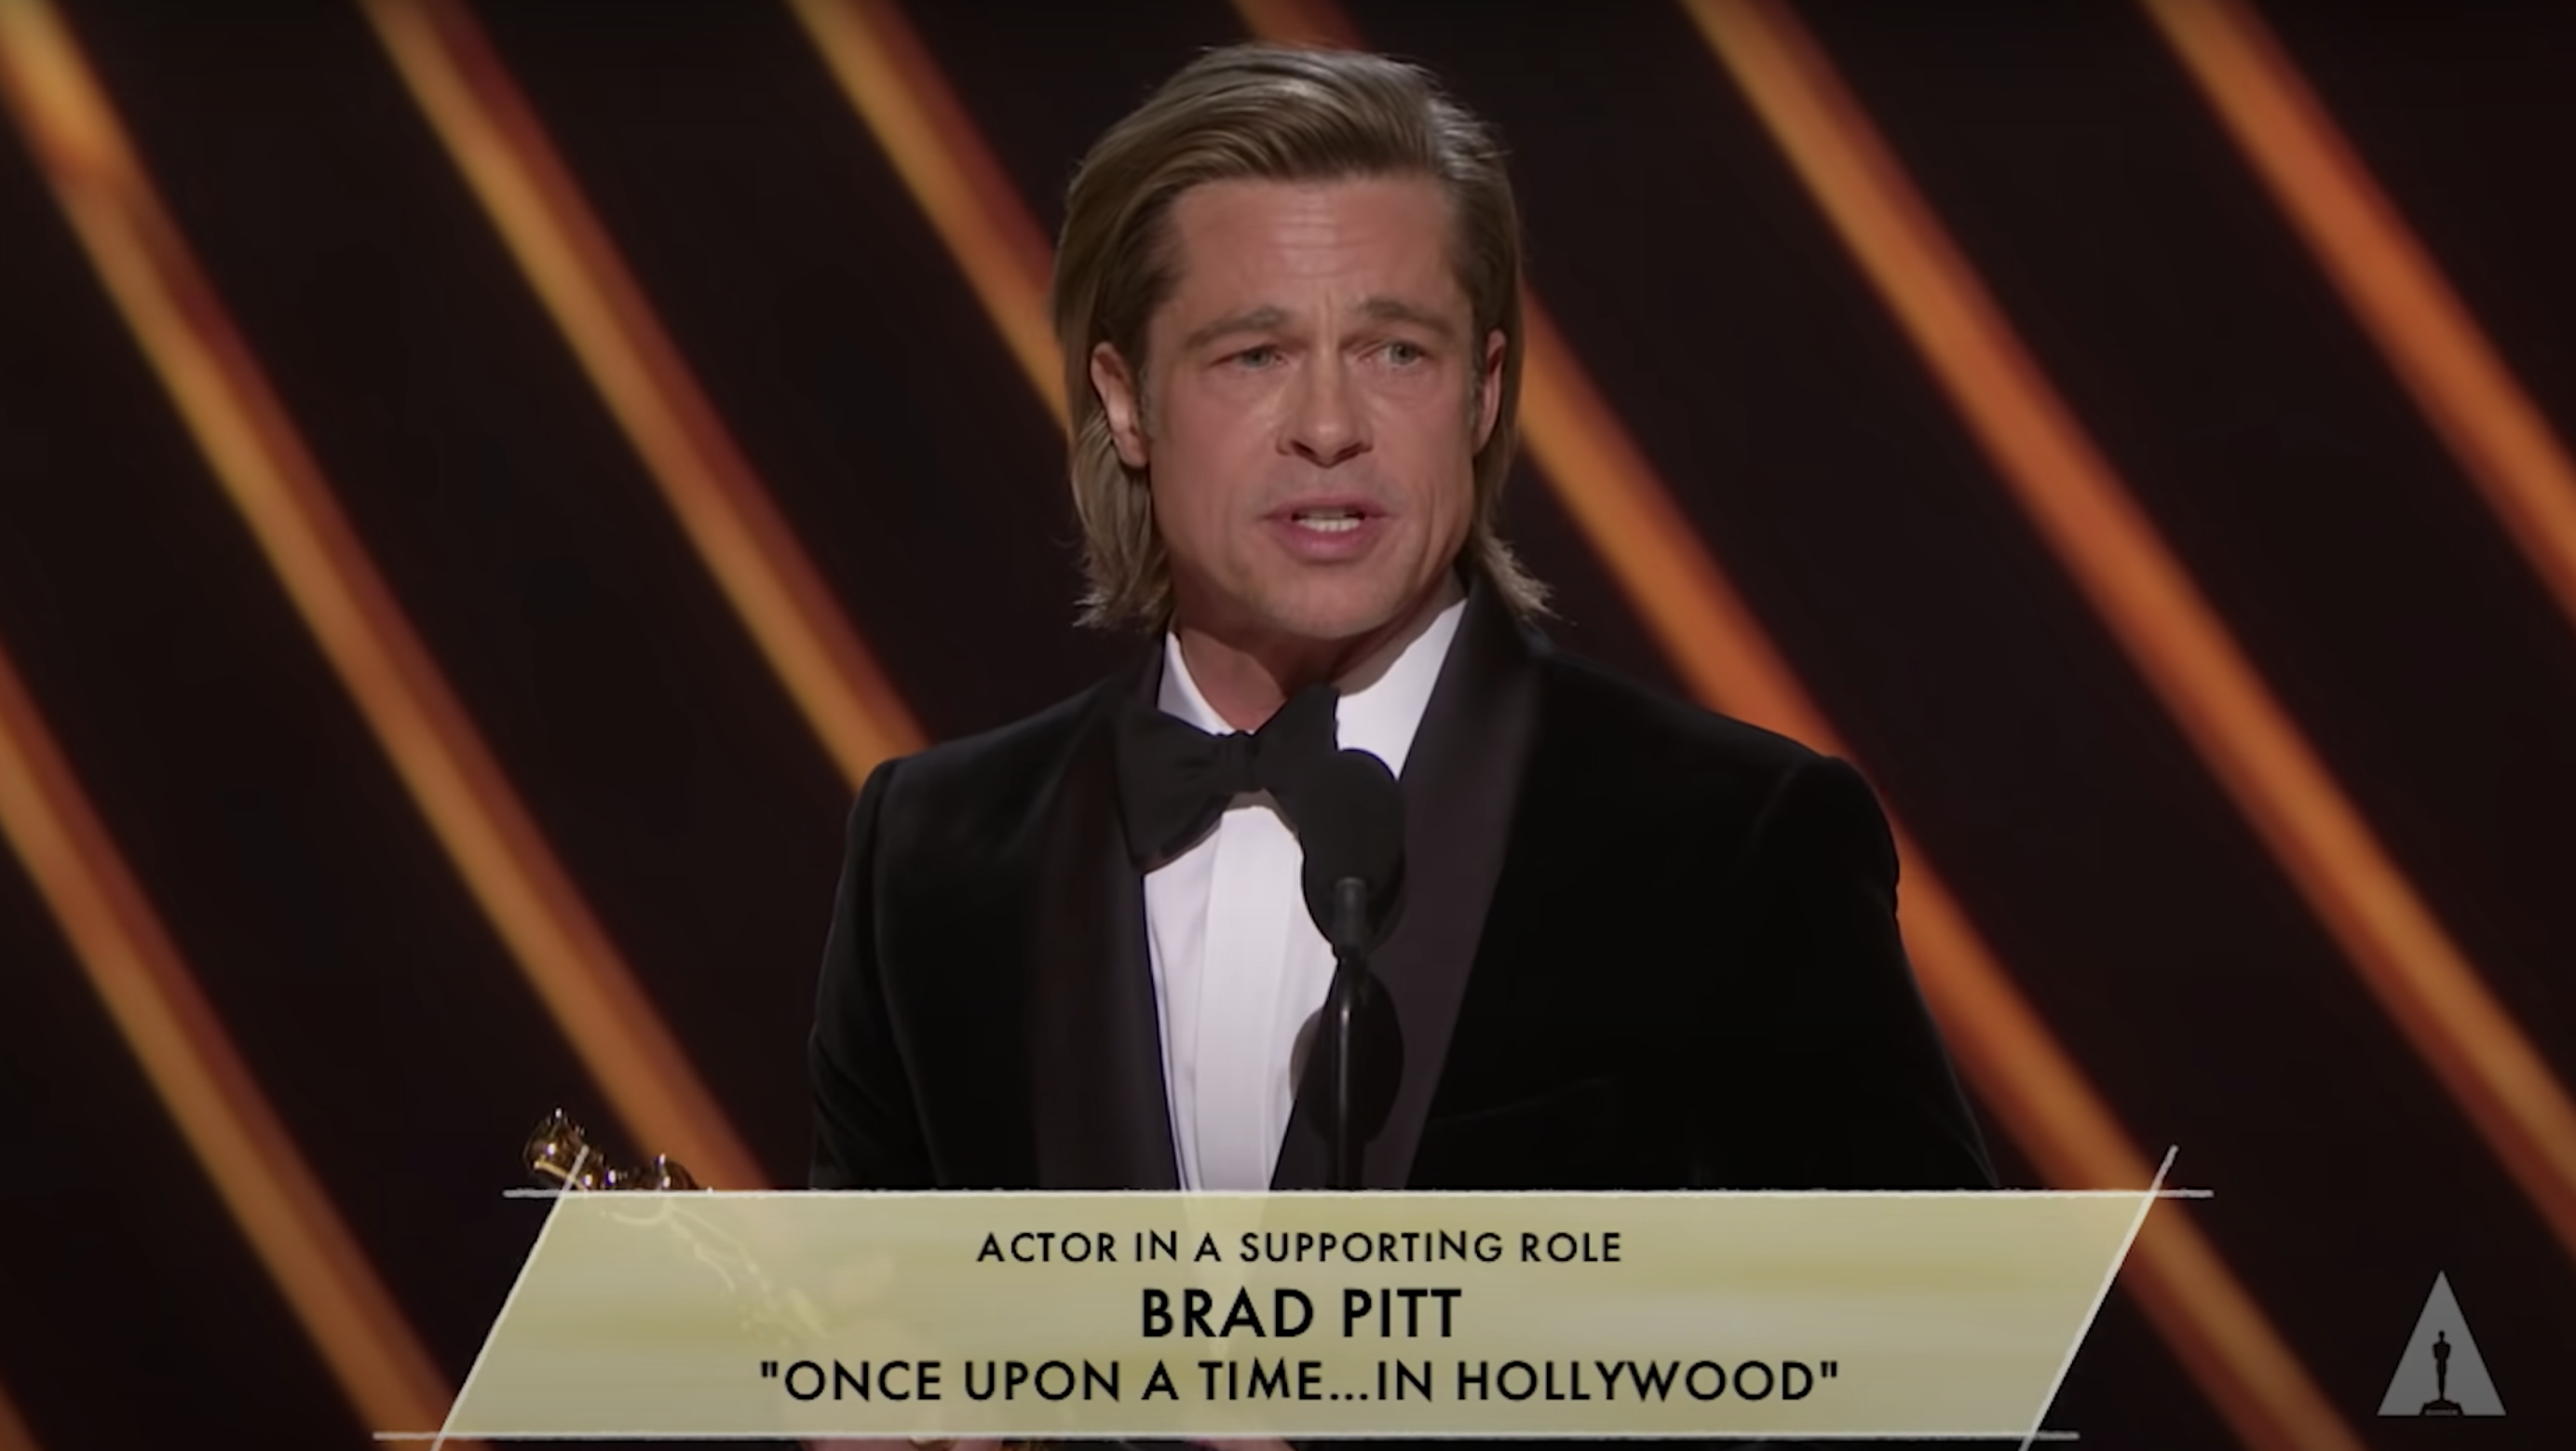 Brad accepting his Oscar